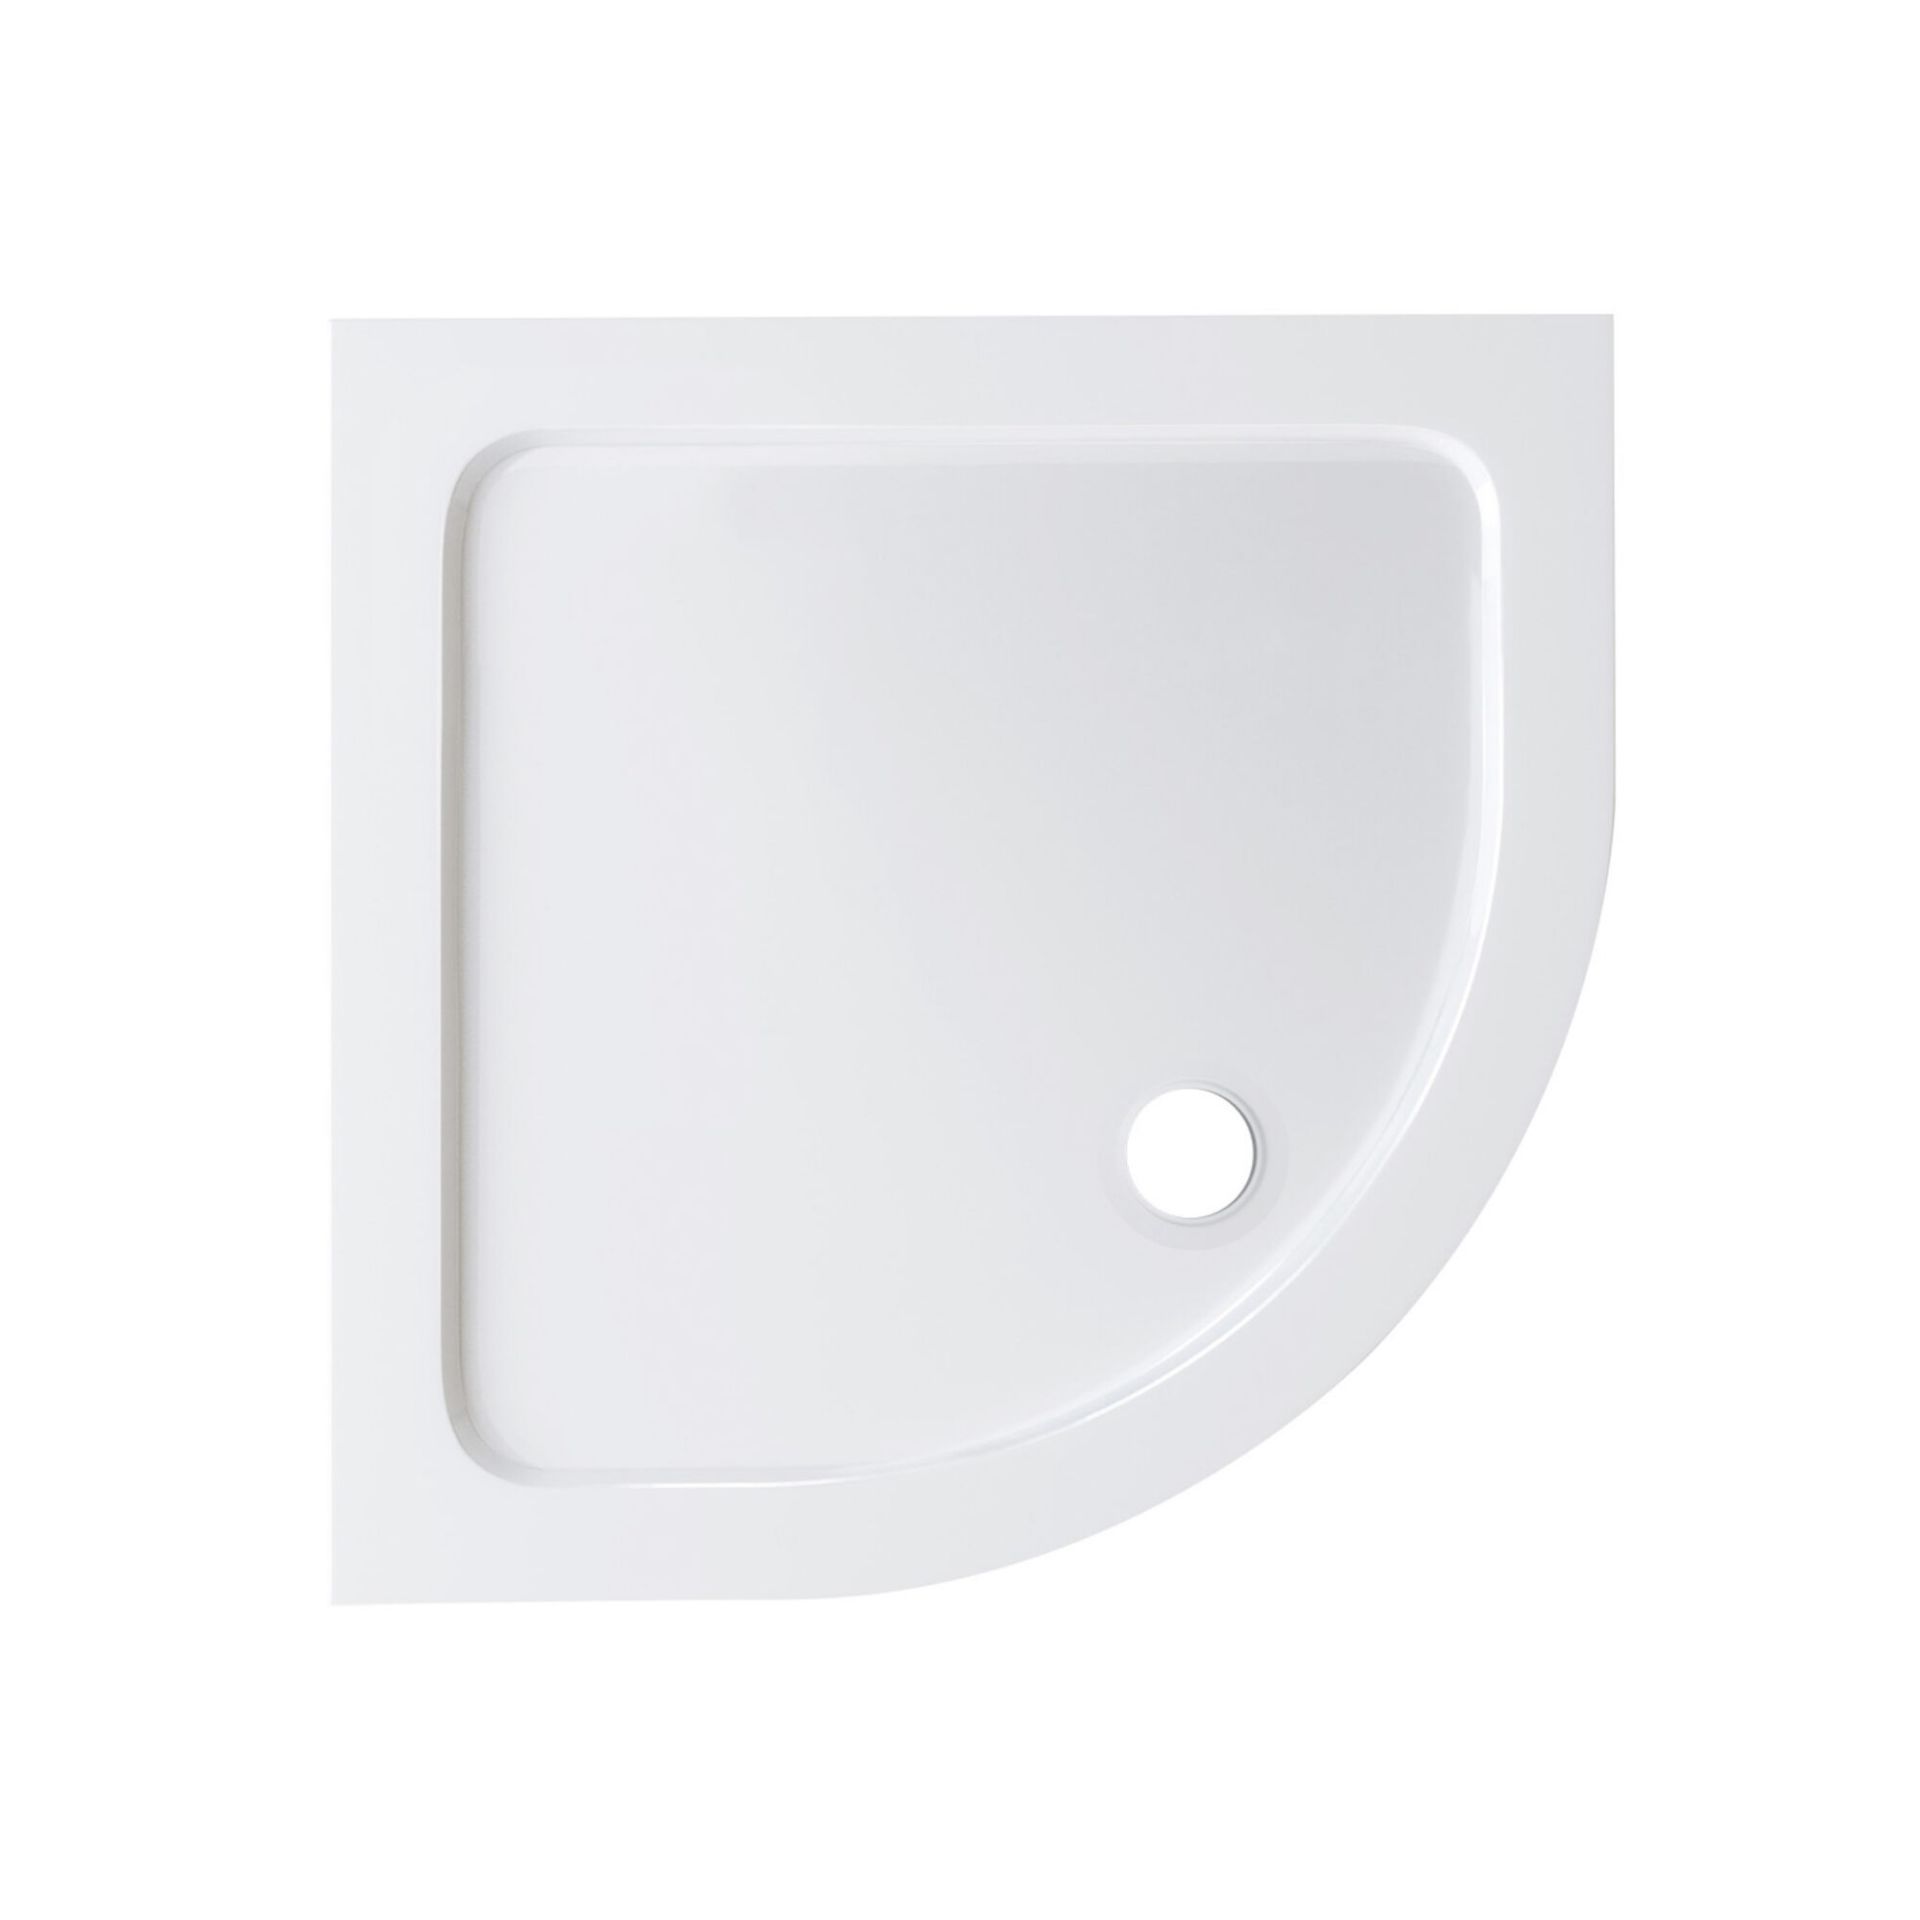 NEW (AA36) 900x900mm Quadrant Ultra Slim Stone Shower Tray. RRP £224.99.Low profile ultra slim...